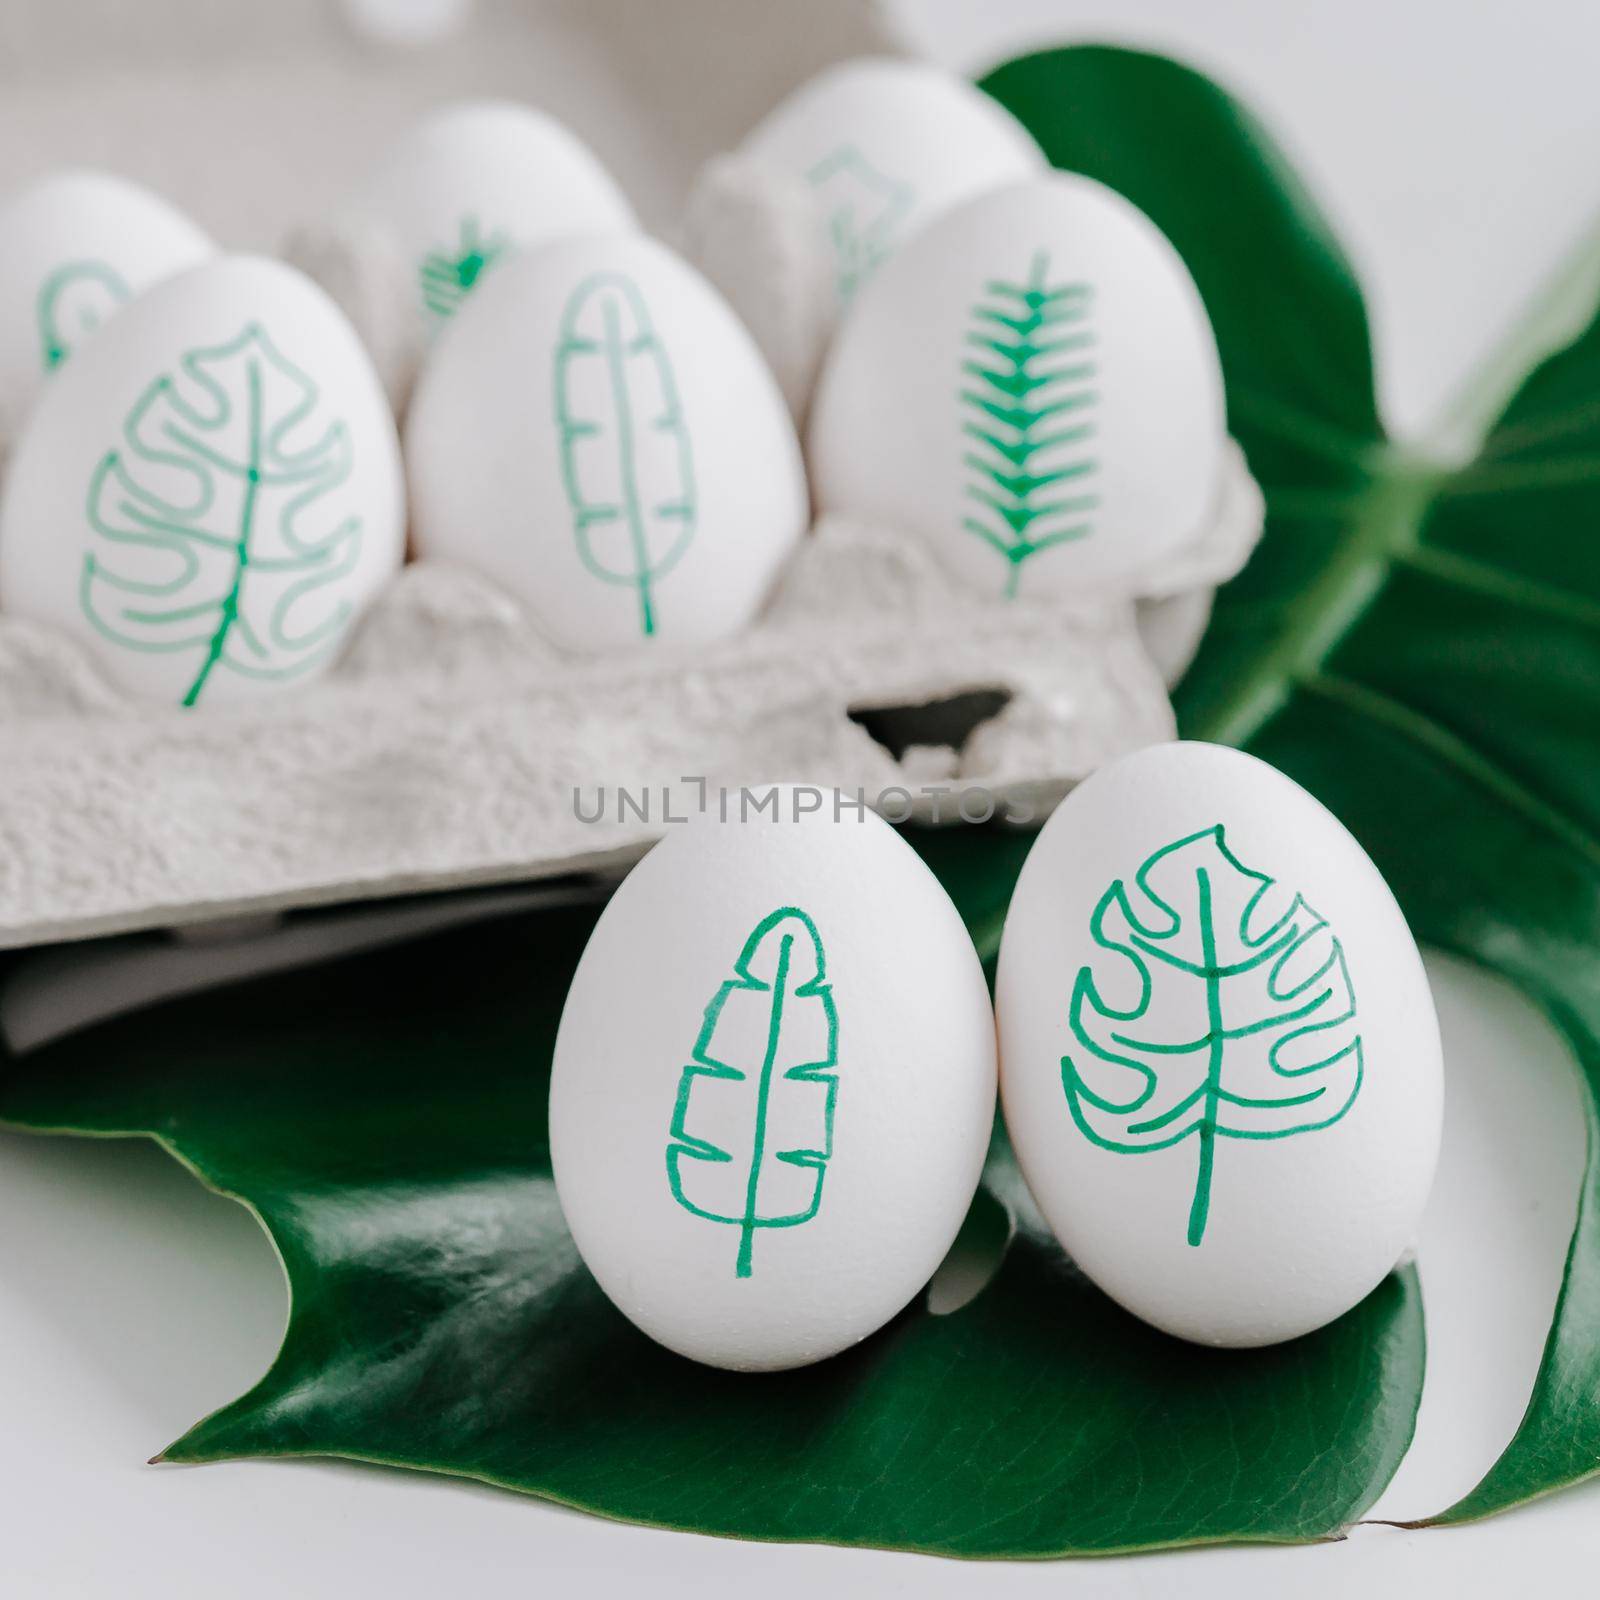 Tropical leaves drawings on easter eggs by fascinadora